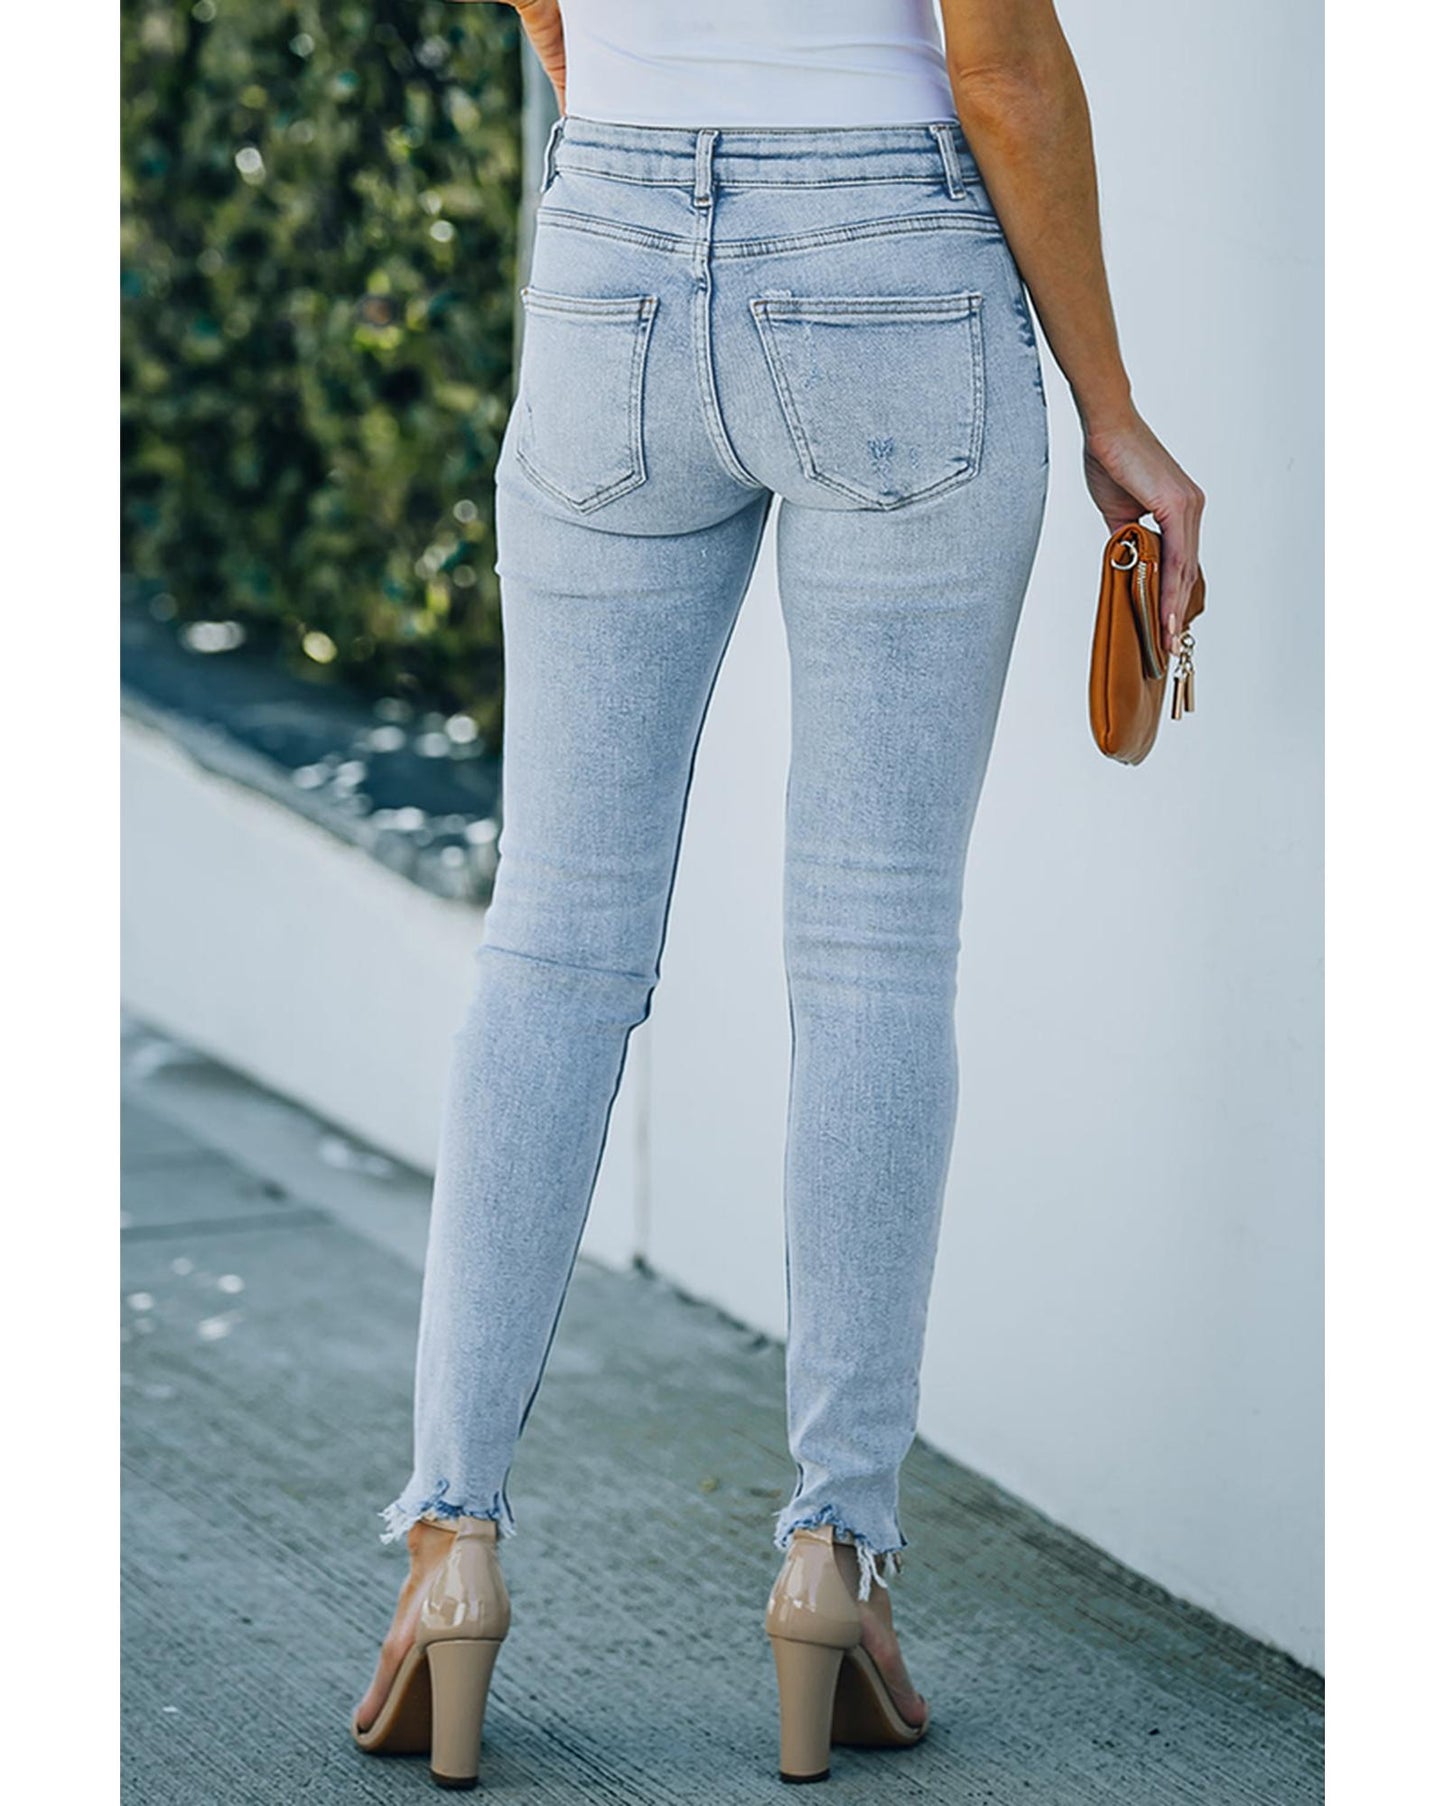 Azura Exchange Ripped Skinny Jeans - L